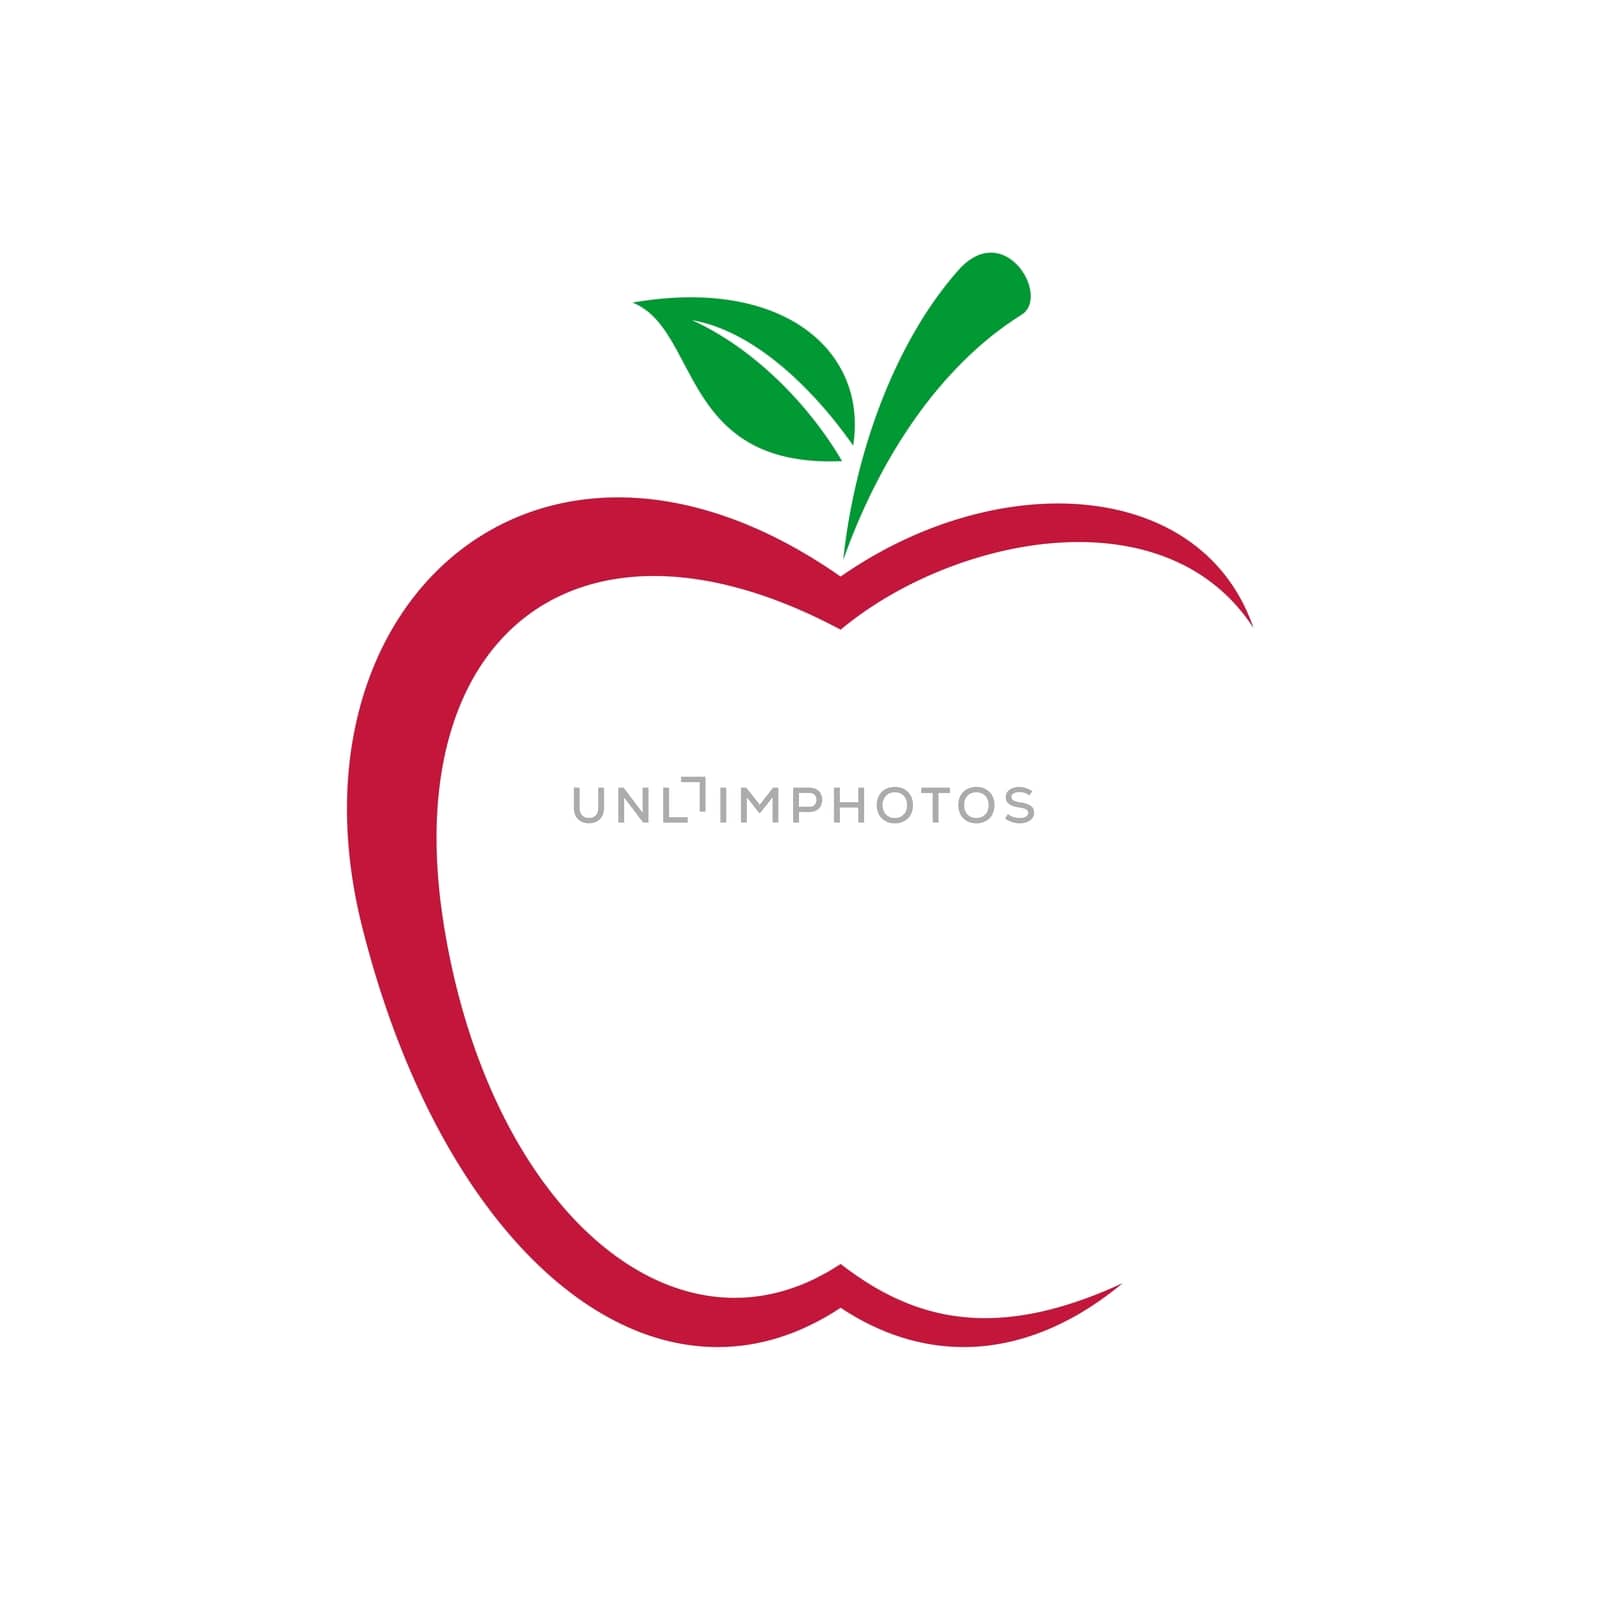 Red Apple Vector Logo Template Illustration Design. Vector EPS 10.